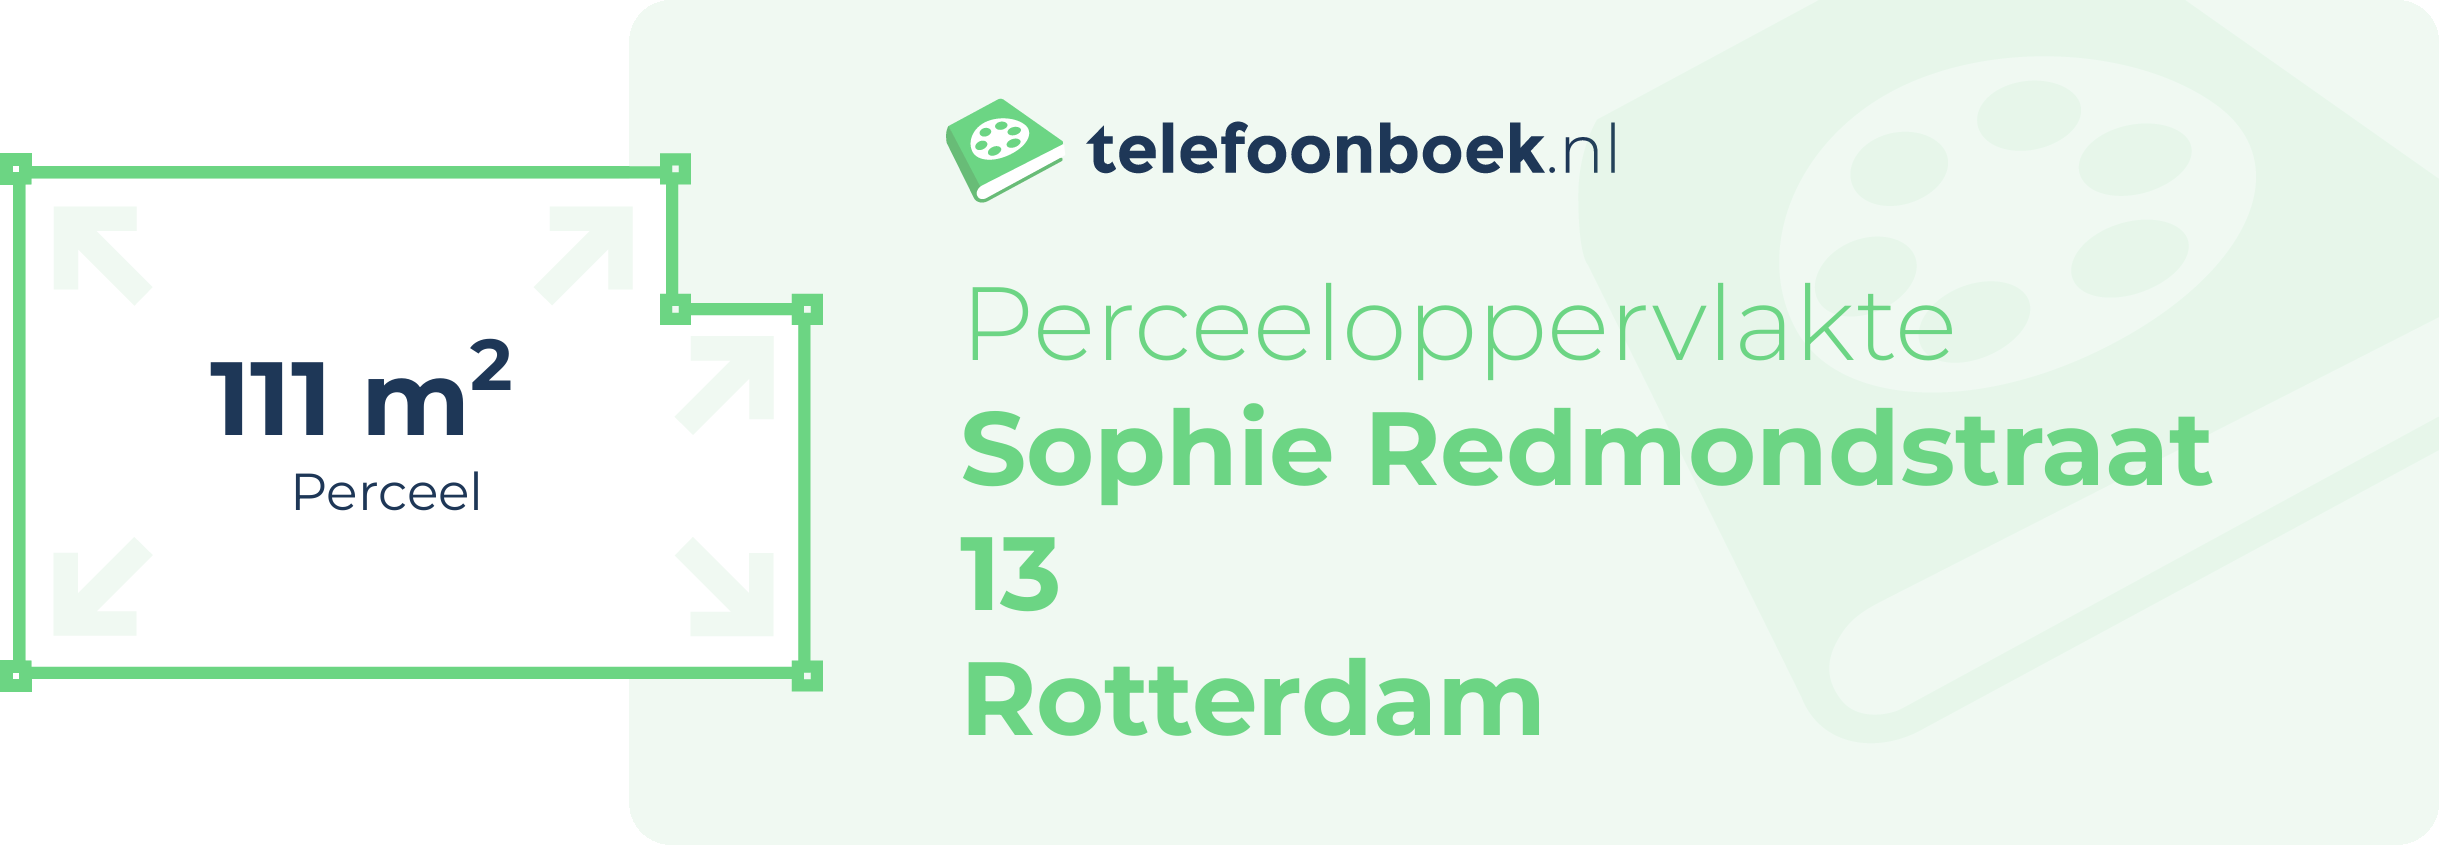 Perceeloppervlakte Sophie Redmondstraat 13 Rotterdam